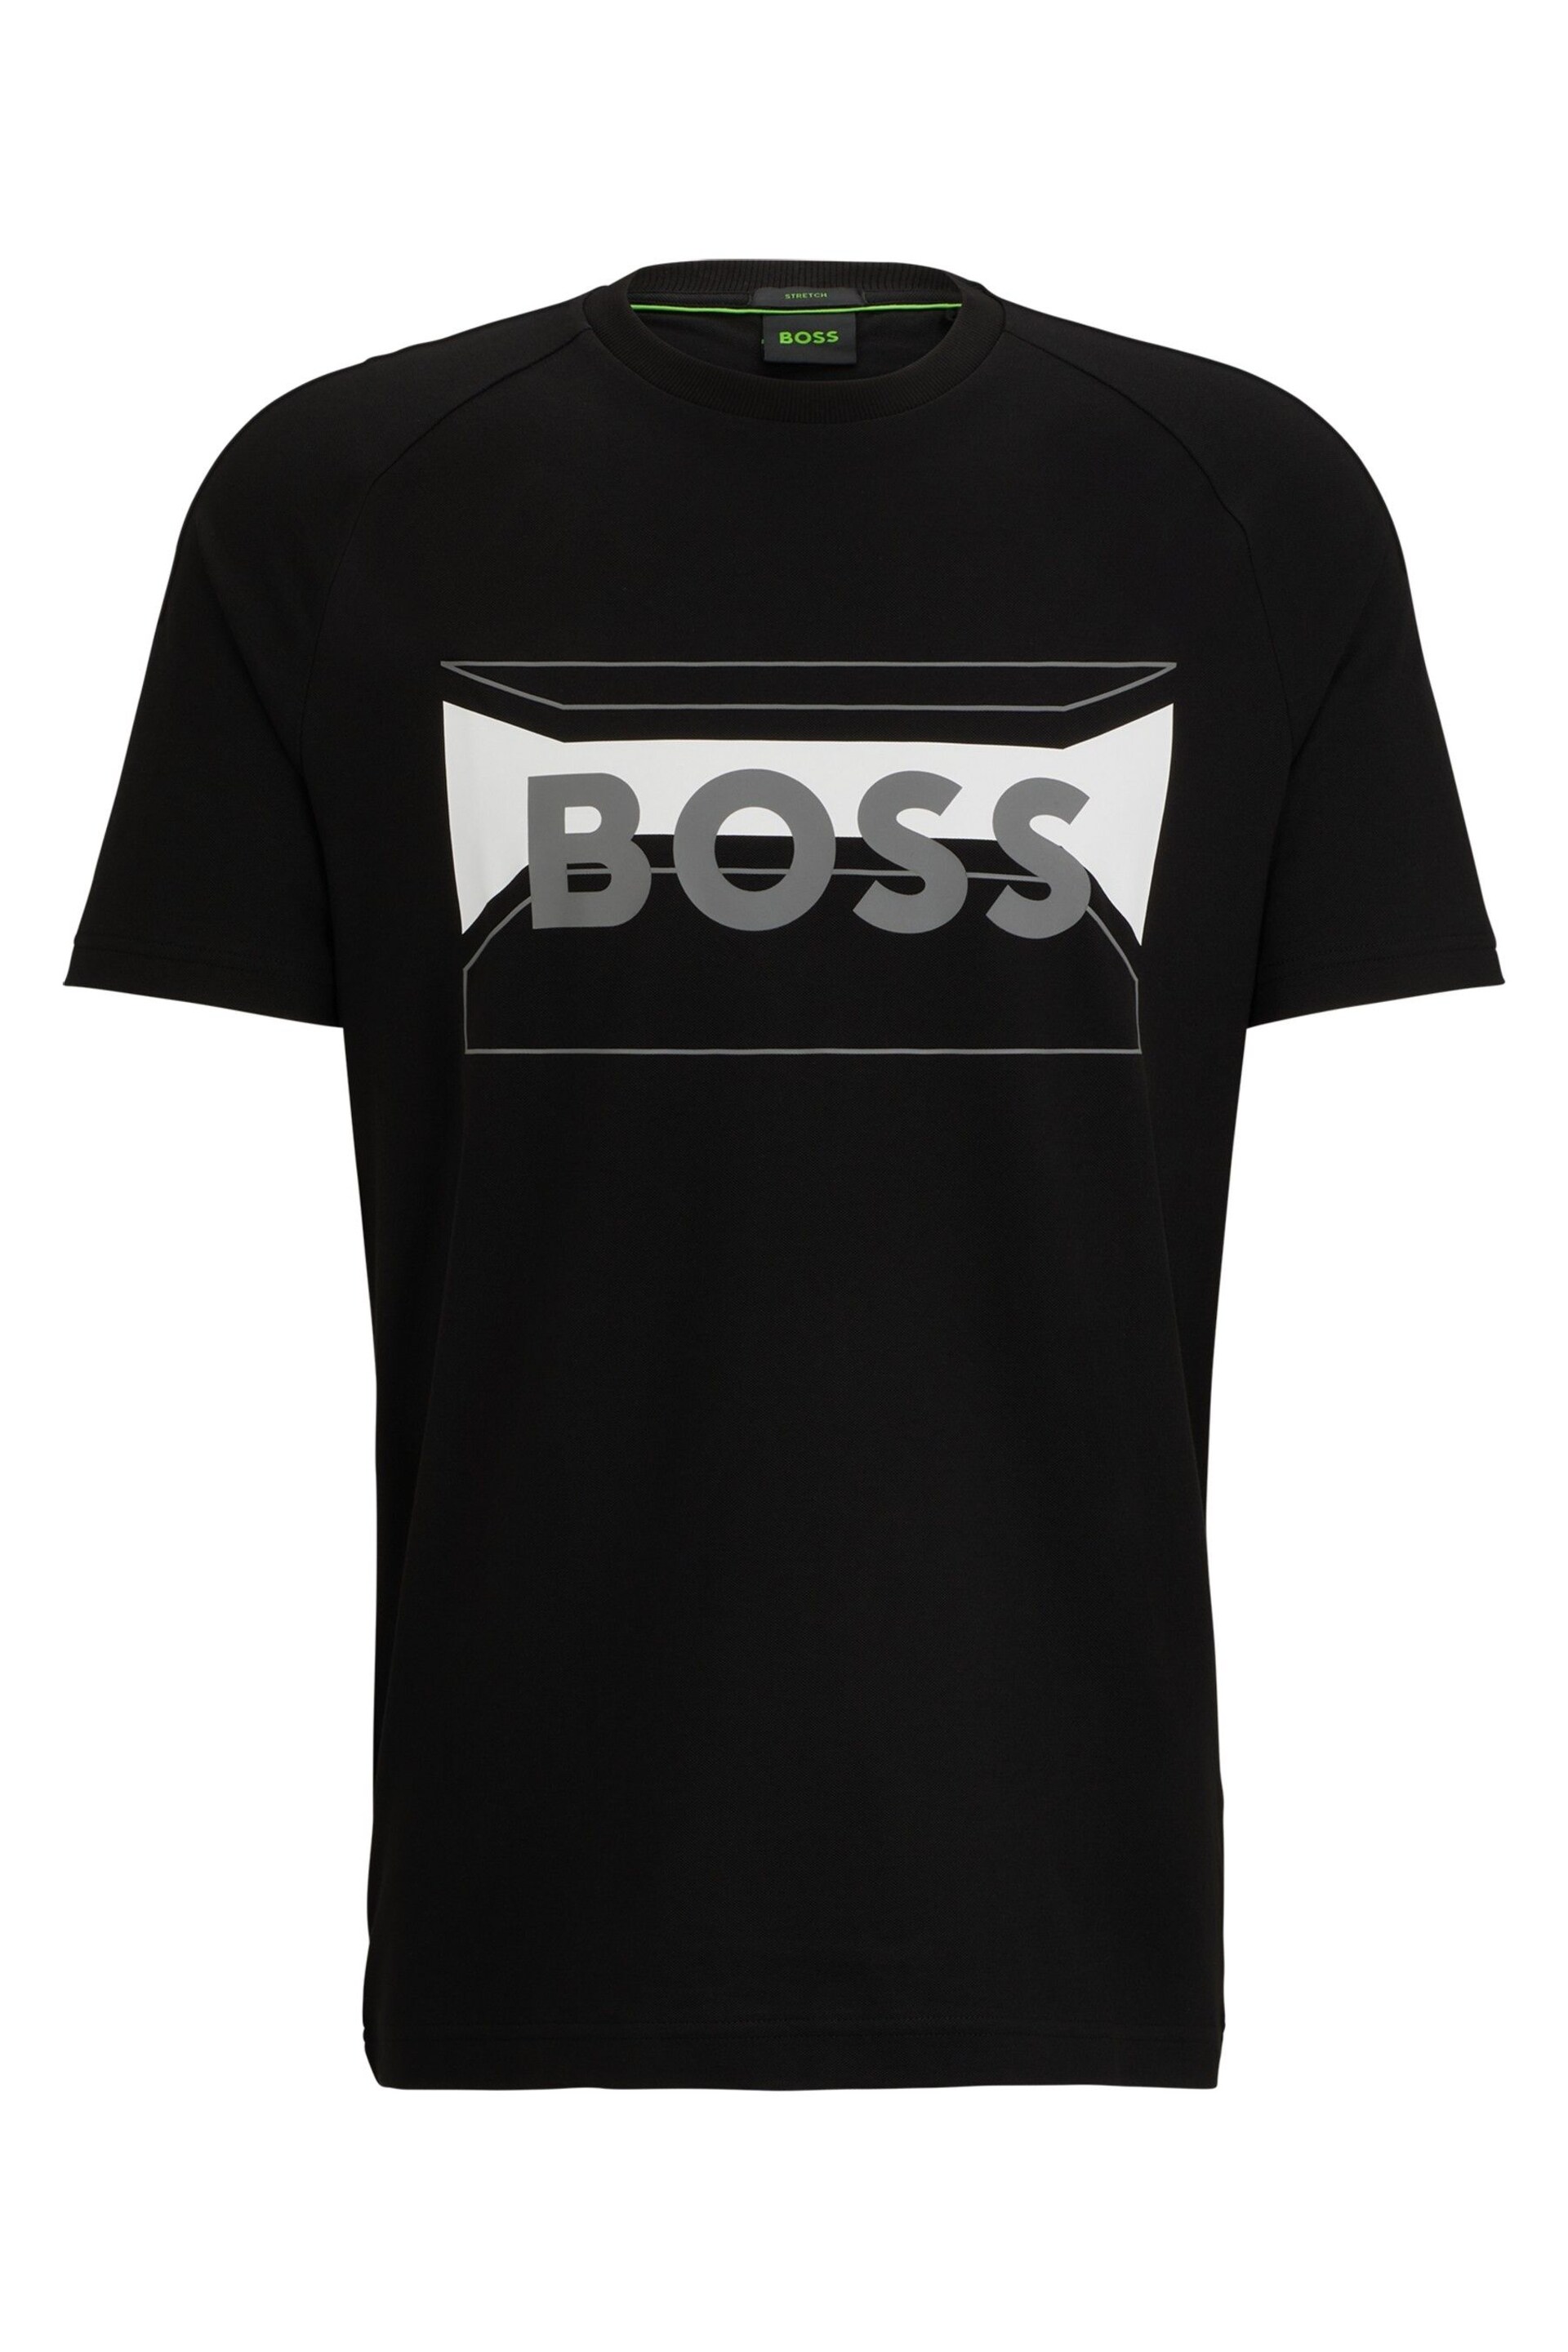 BOSS Black Logo Artwork T-Shirt - Image 5 of 5